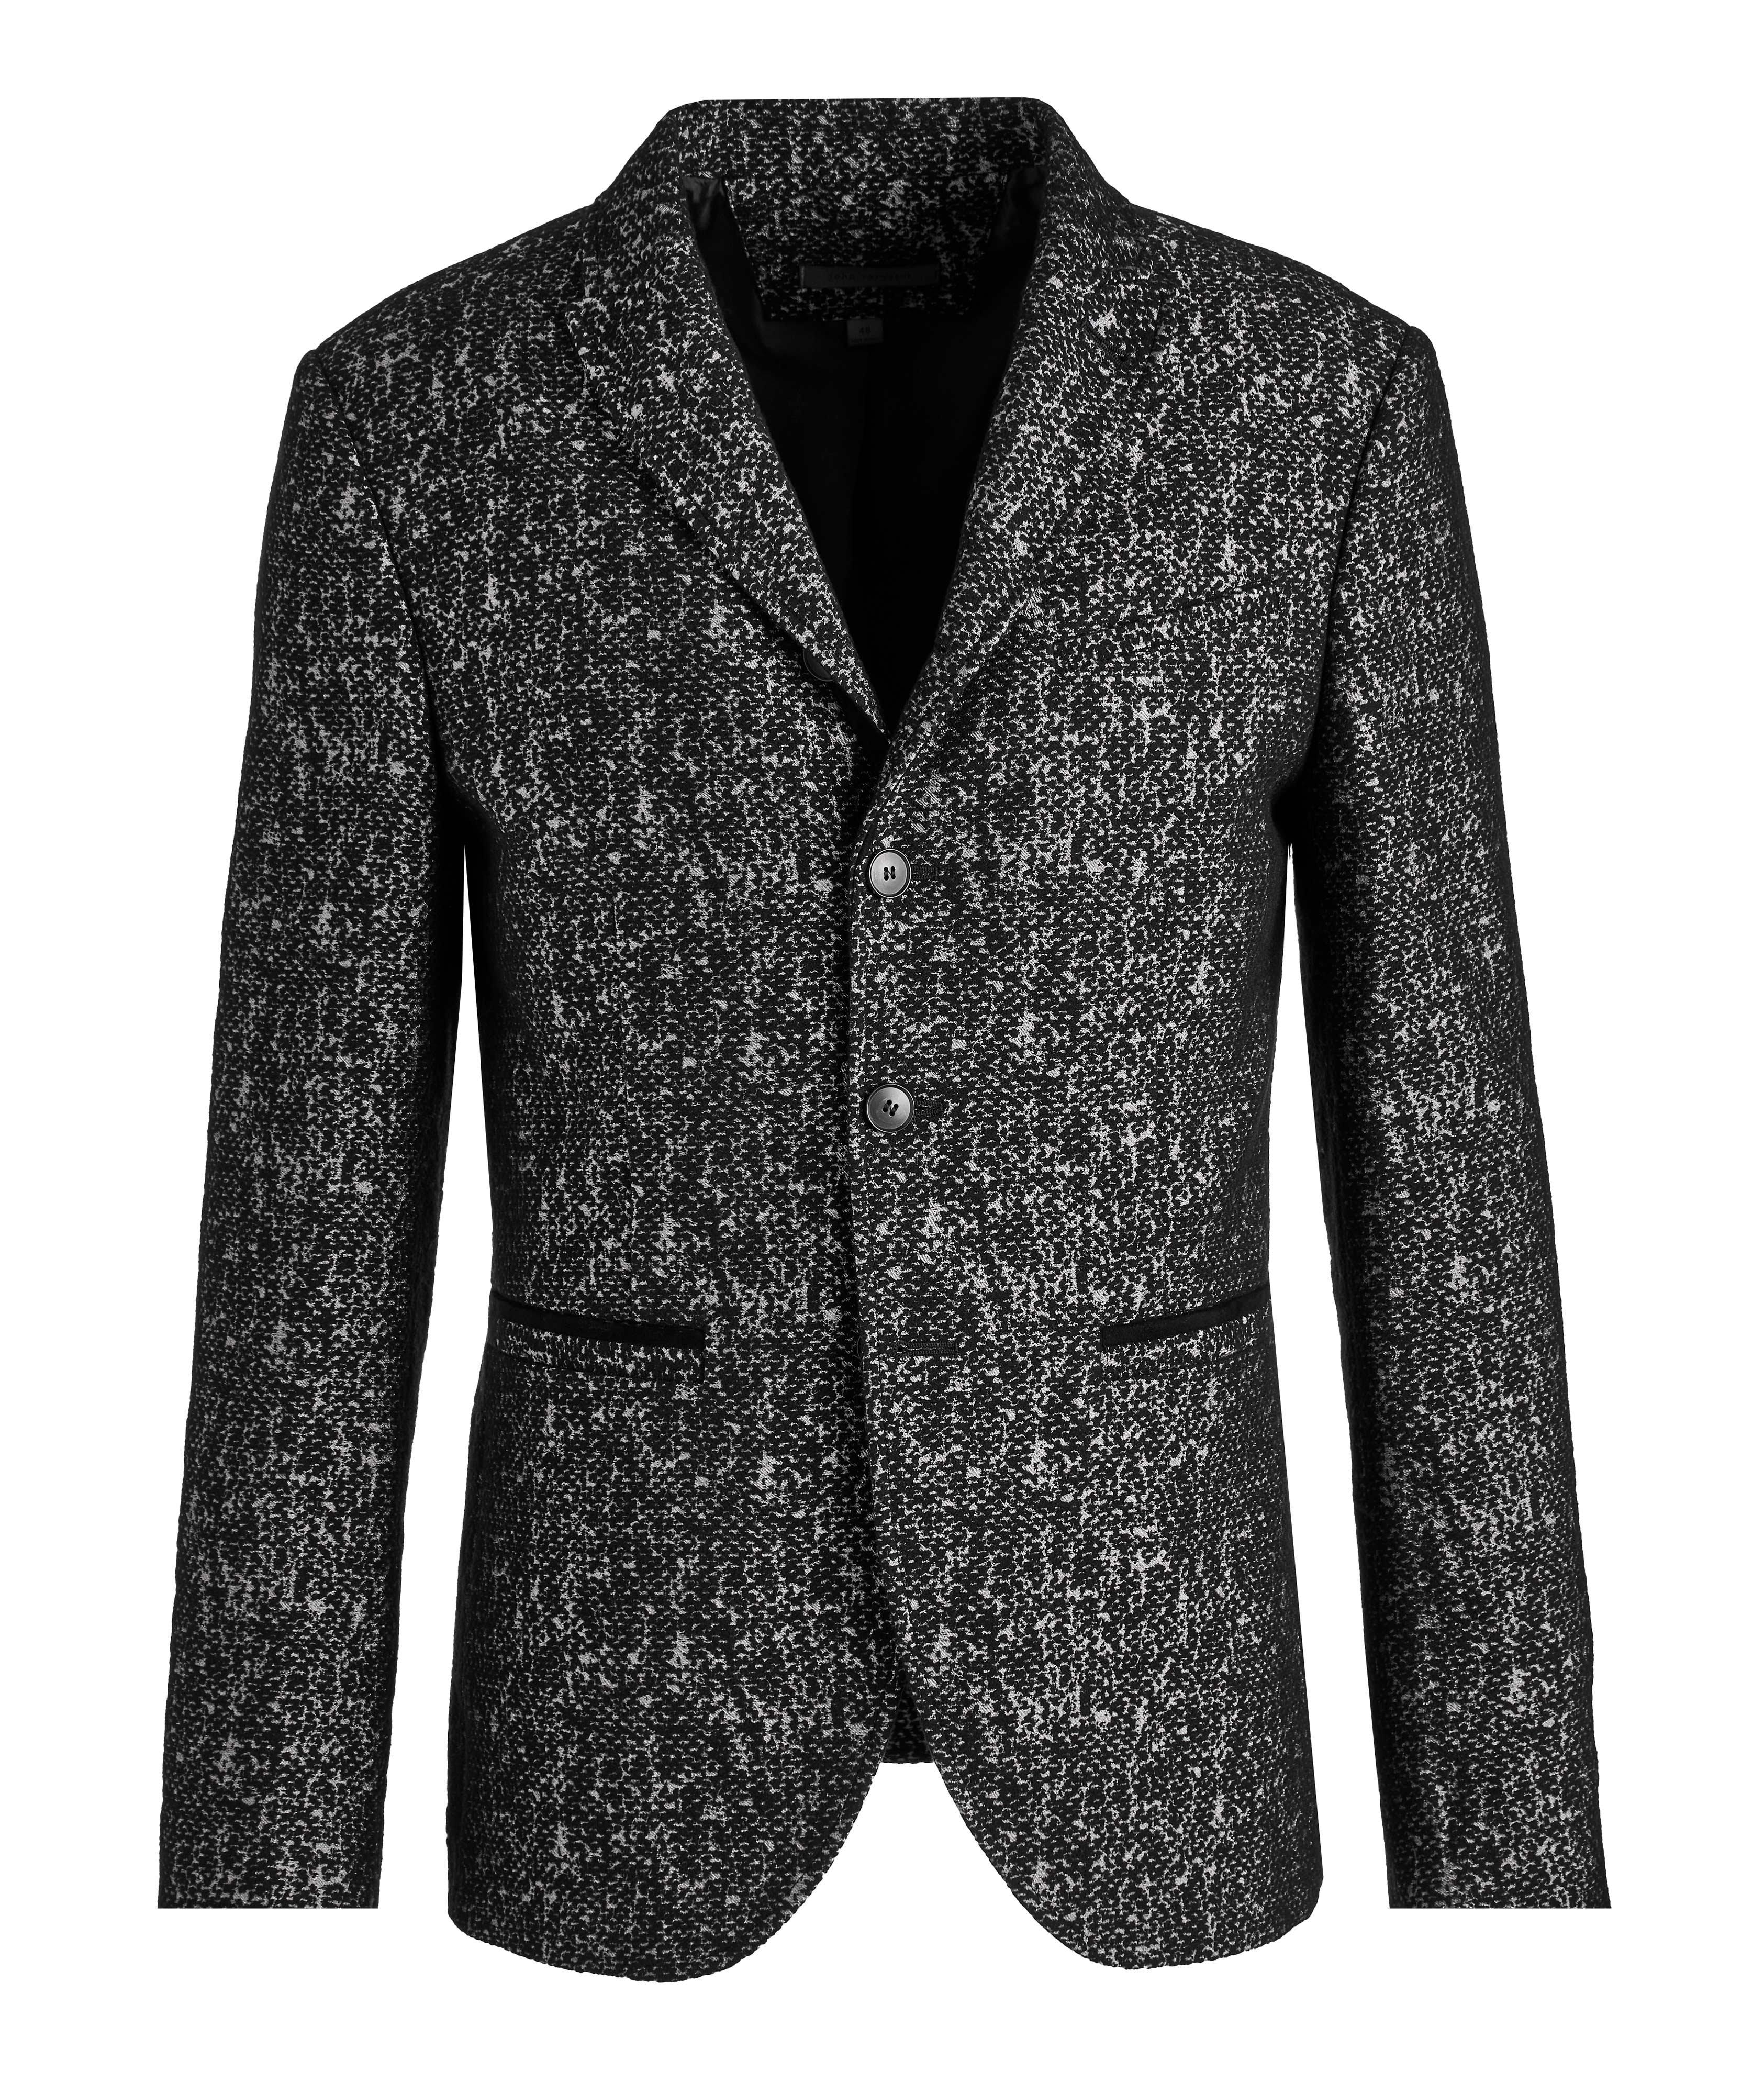 Wool-Blend Jacquard Soft Jacket image 0